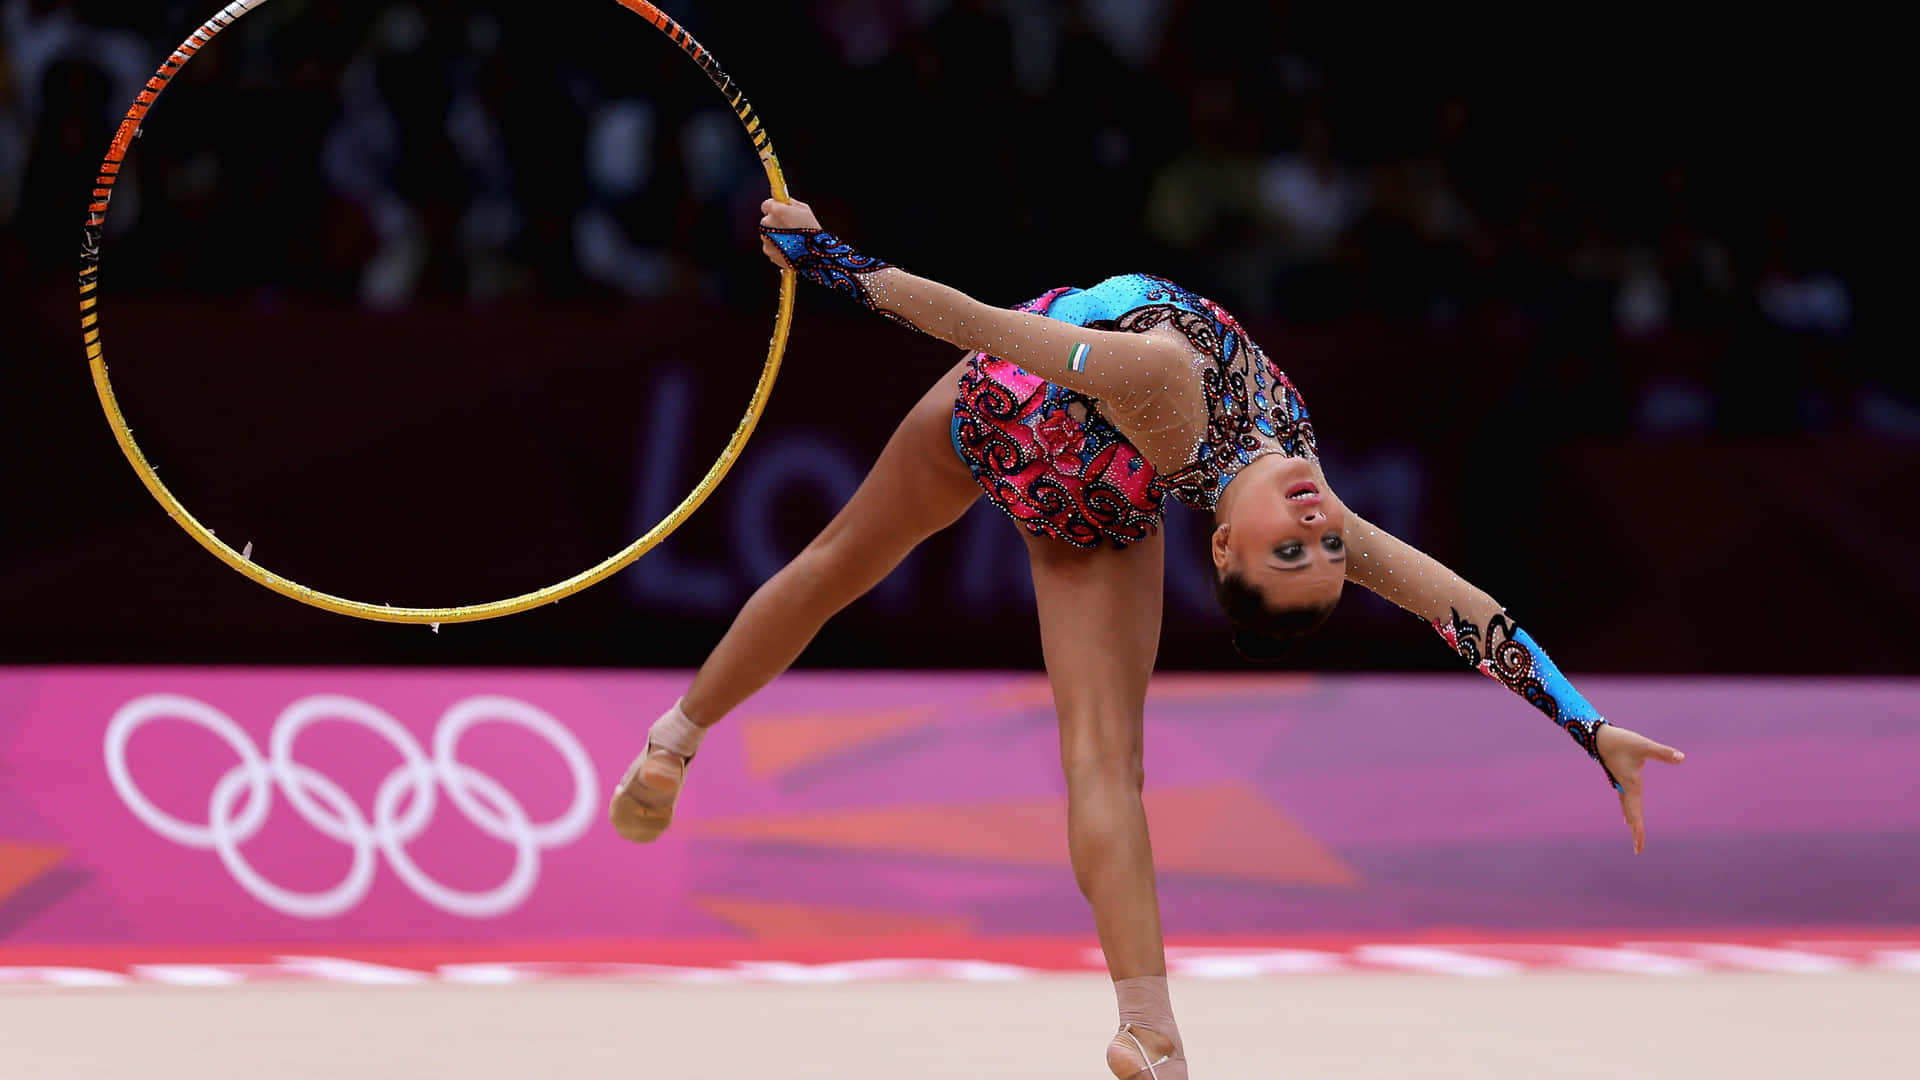 Female gymnast performing artistic gymnastics on balance beam